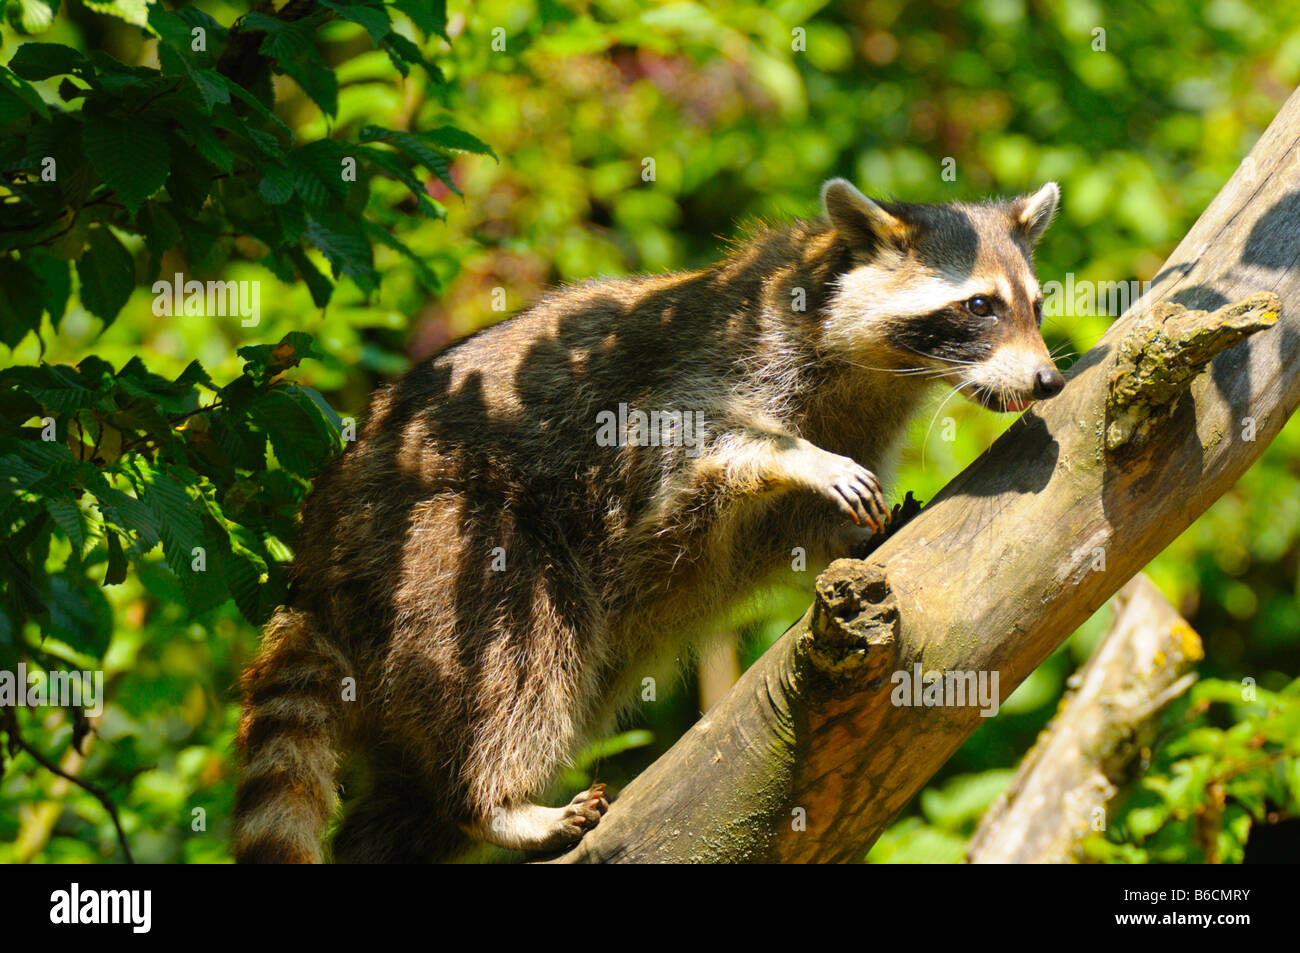 Northern raccoon (Procyon lotor) climbing on tree Stock Photo